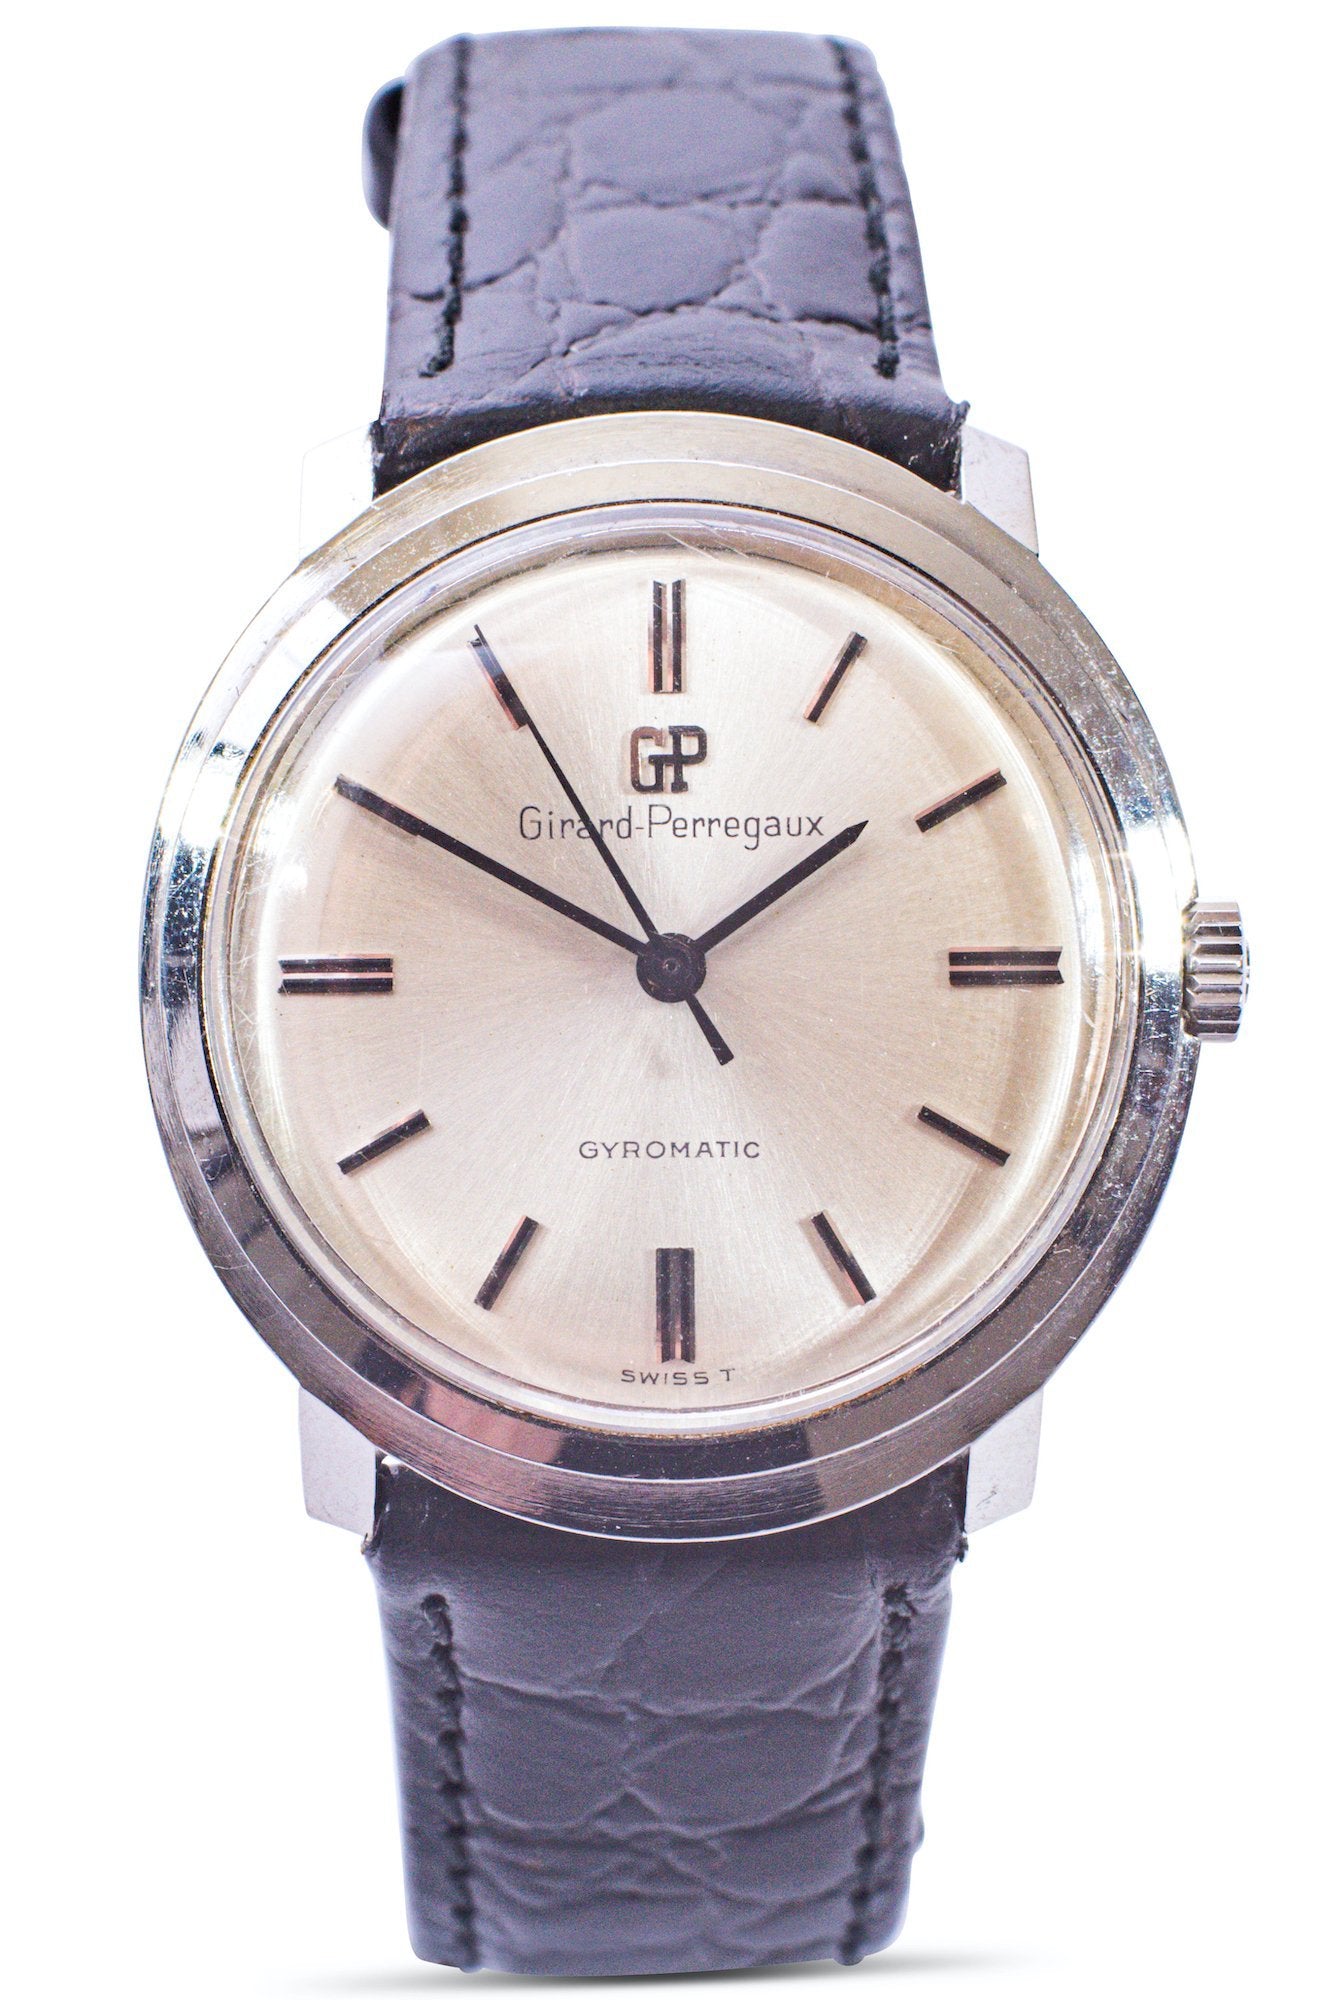 Girard Perregaux Gyromatic 2 - Counting Time Watch Purveyors